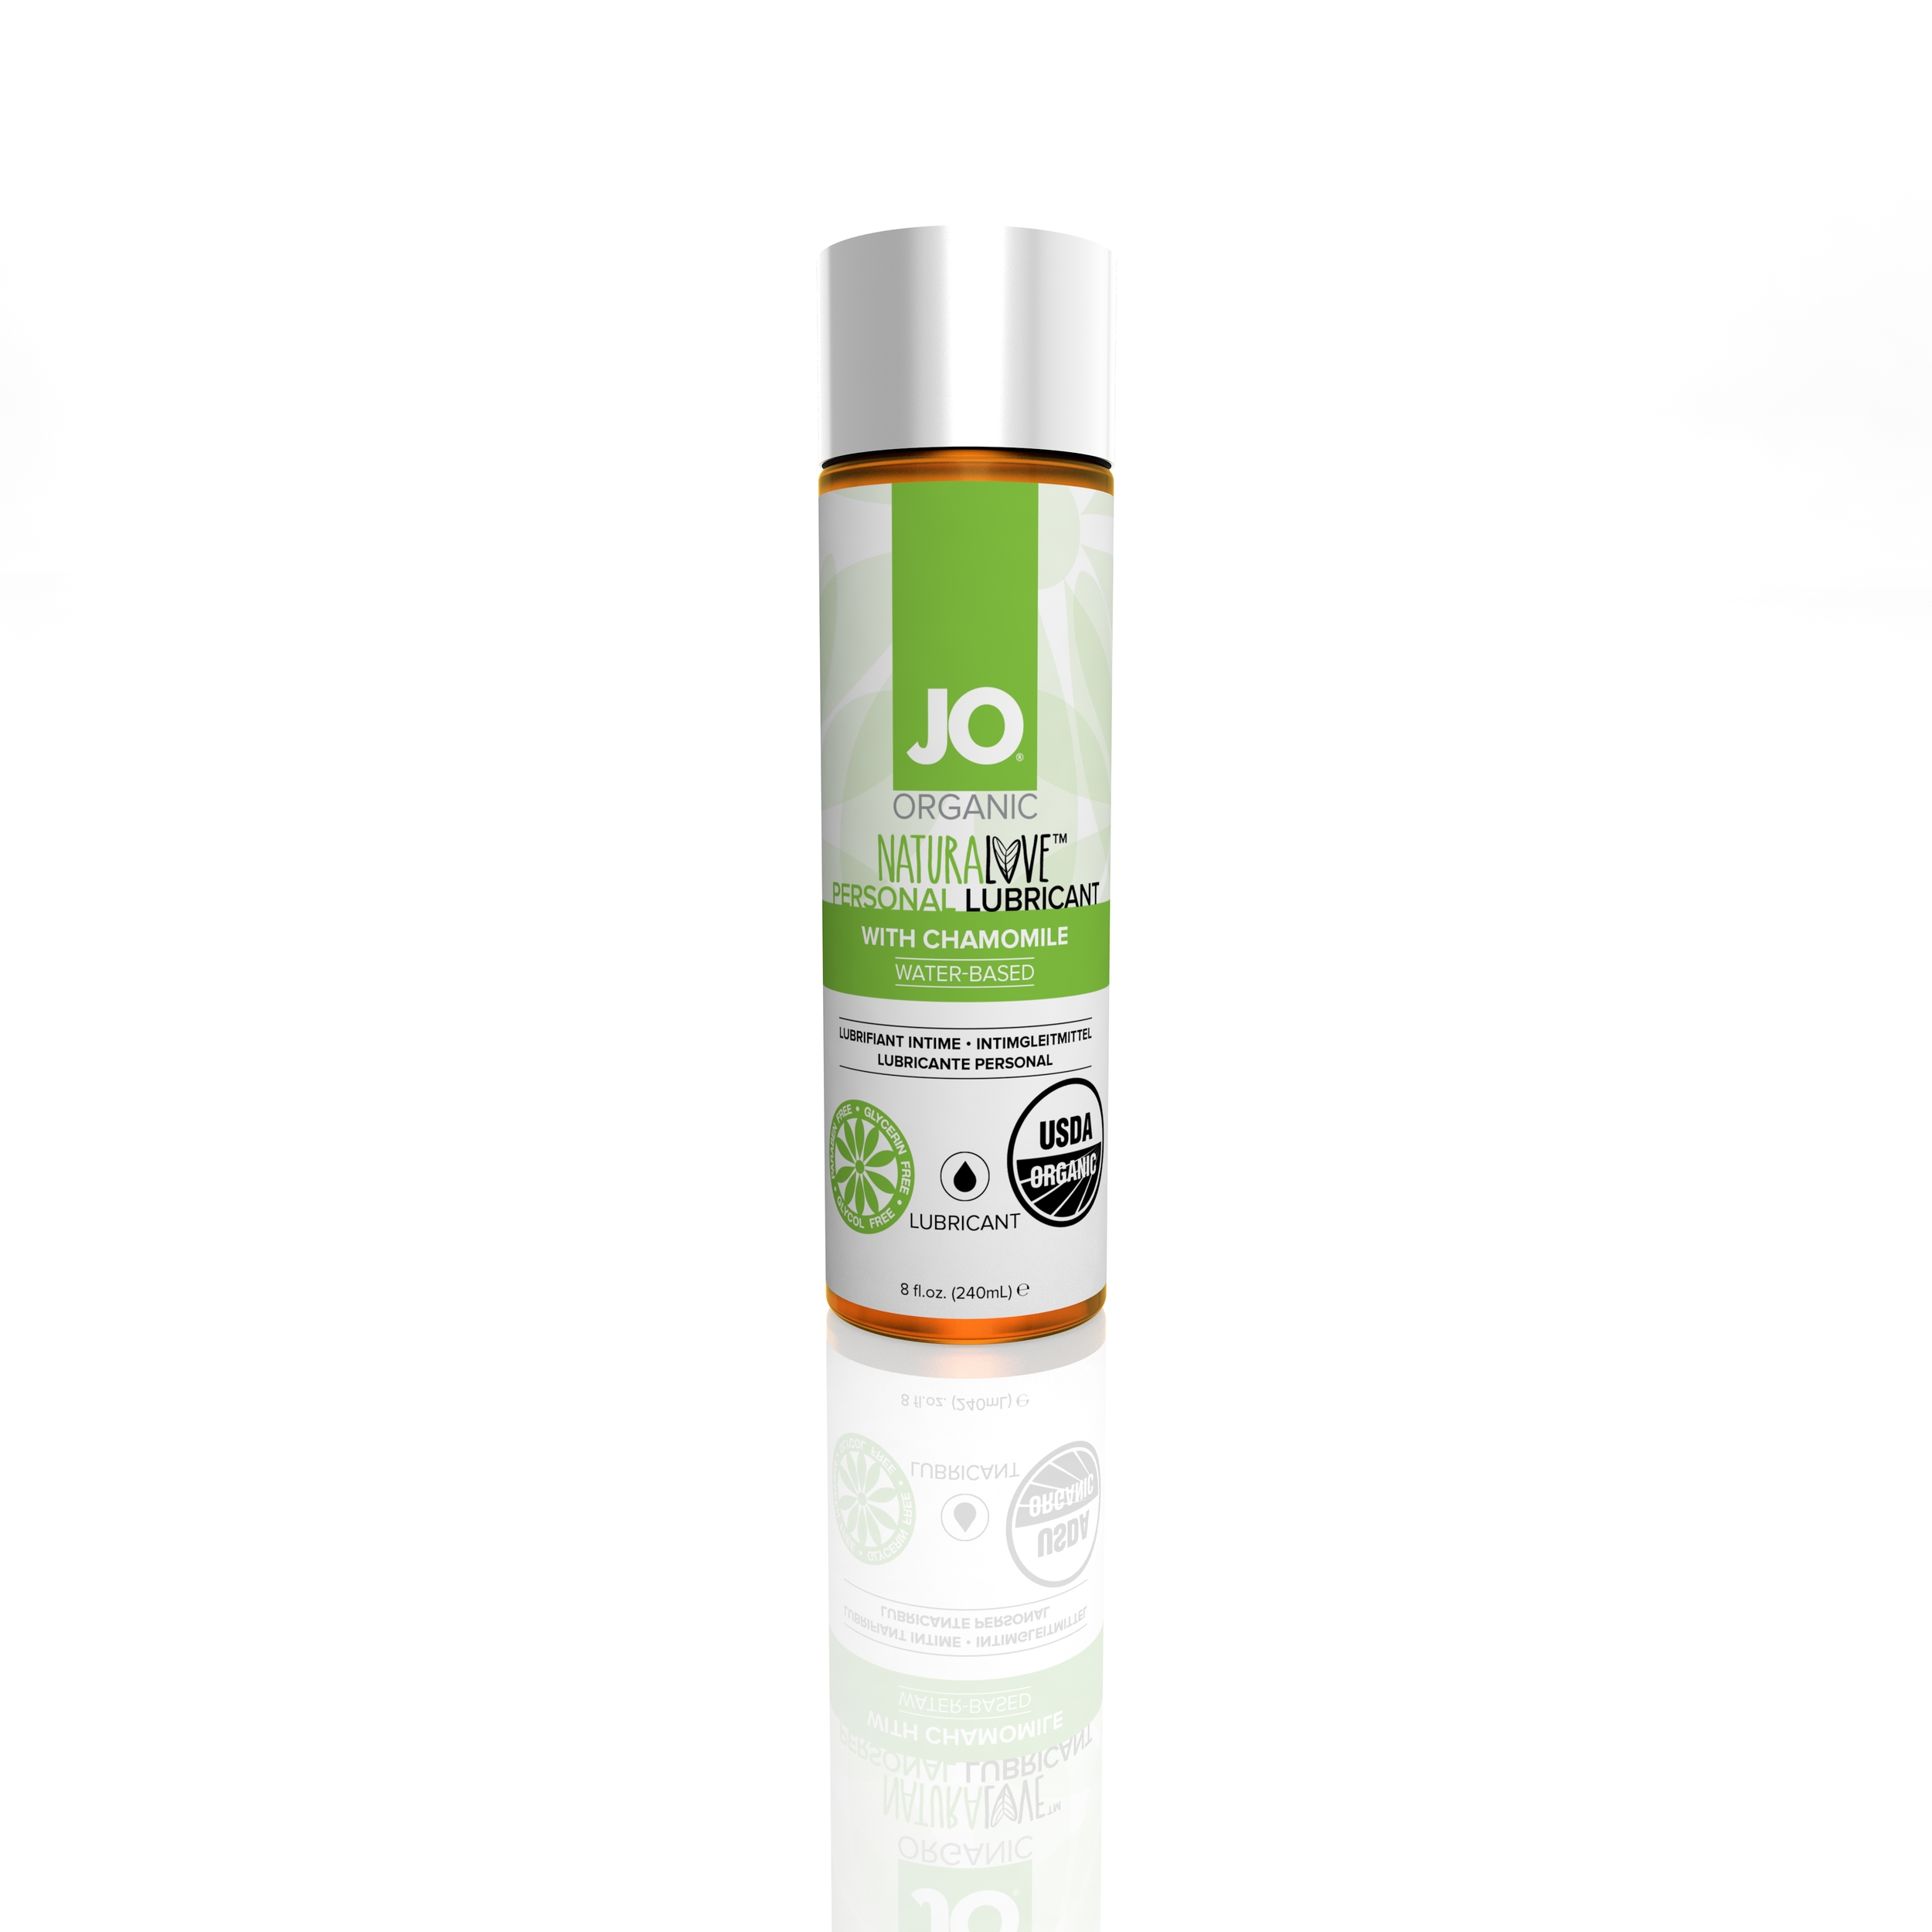 JO USDA Organic 8oz Original Lubricant (straight on) (white)001.jpg